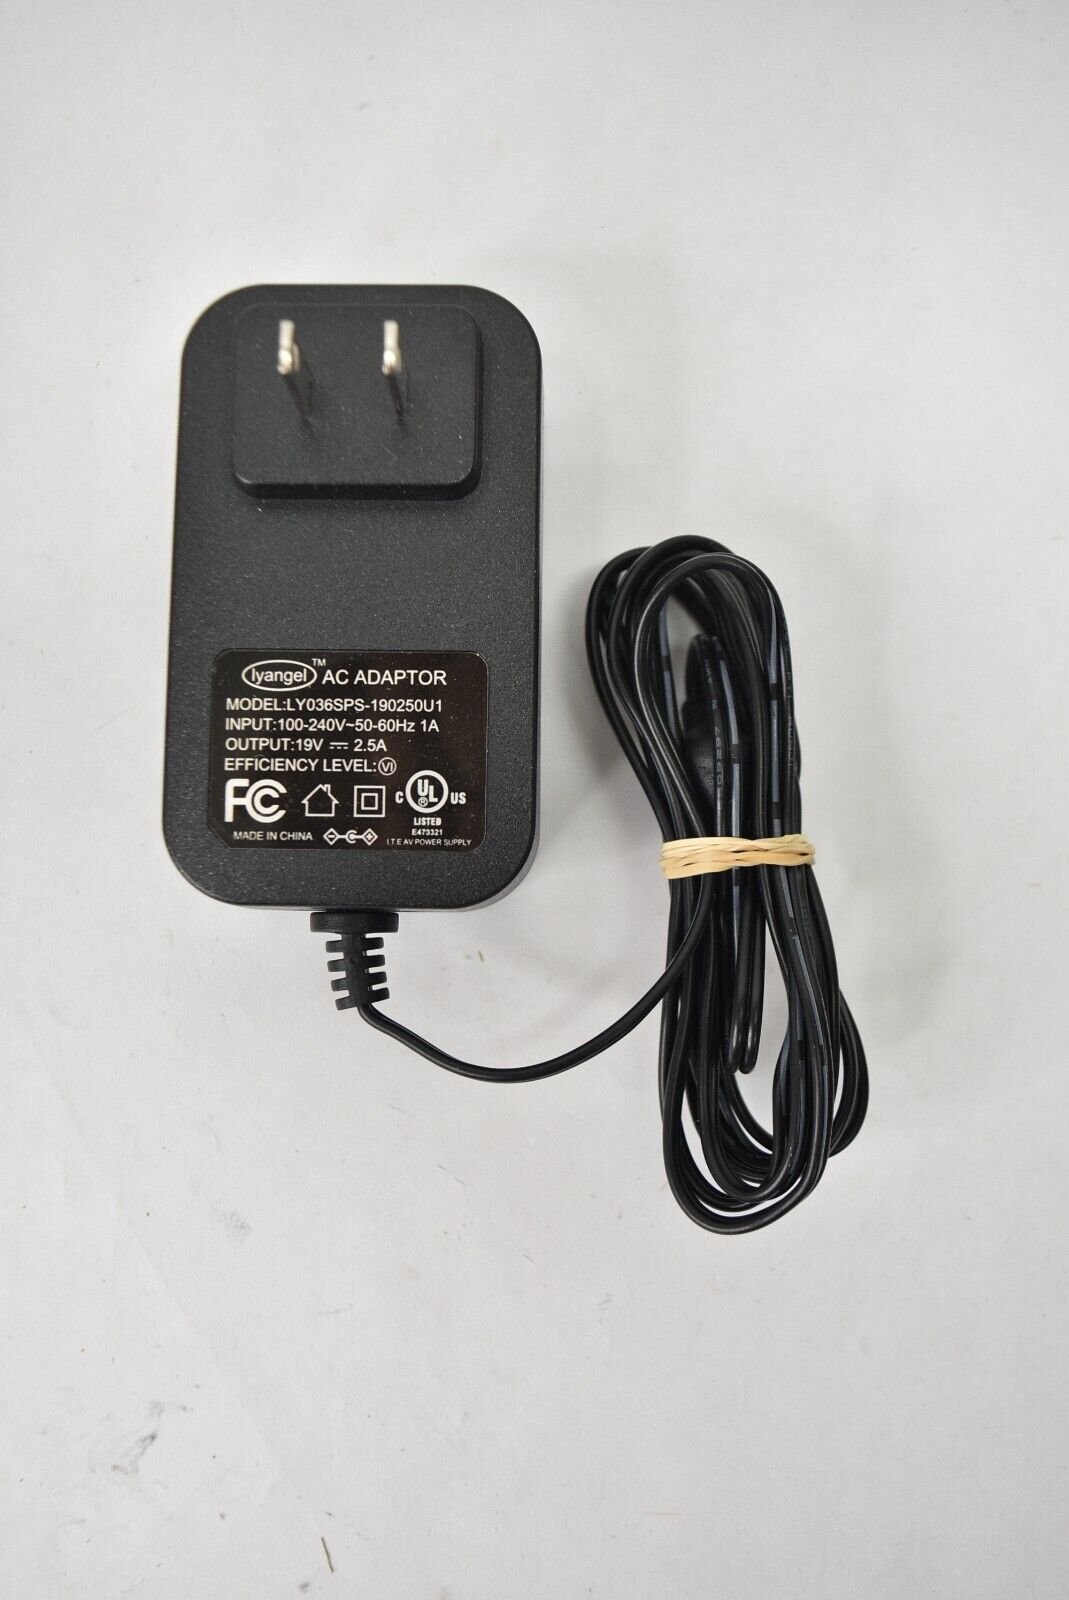 *Brand NEW* Lyangel AC Adapter Power Supply Unit LY036SPS-190250U1 19V 2.5A